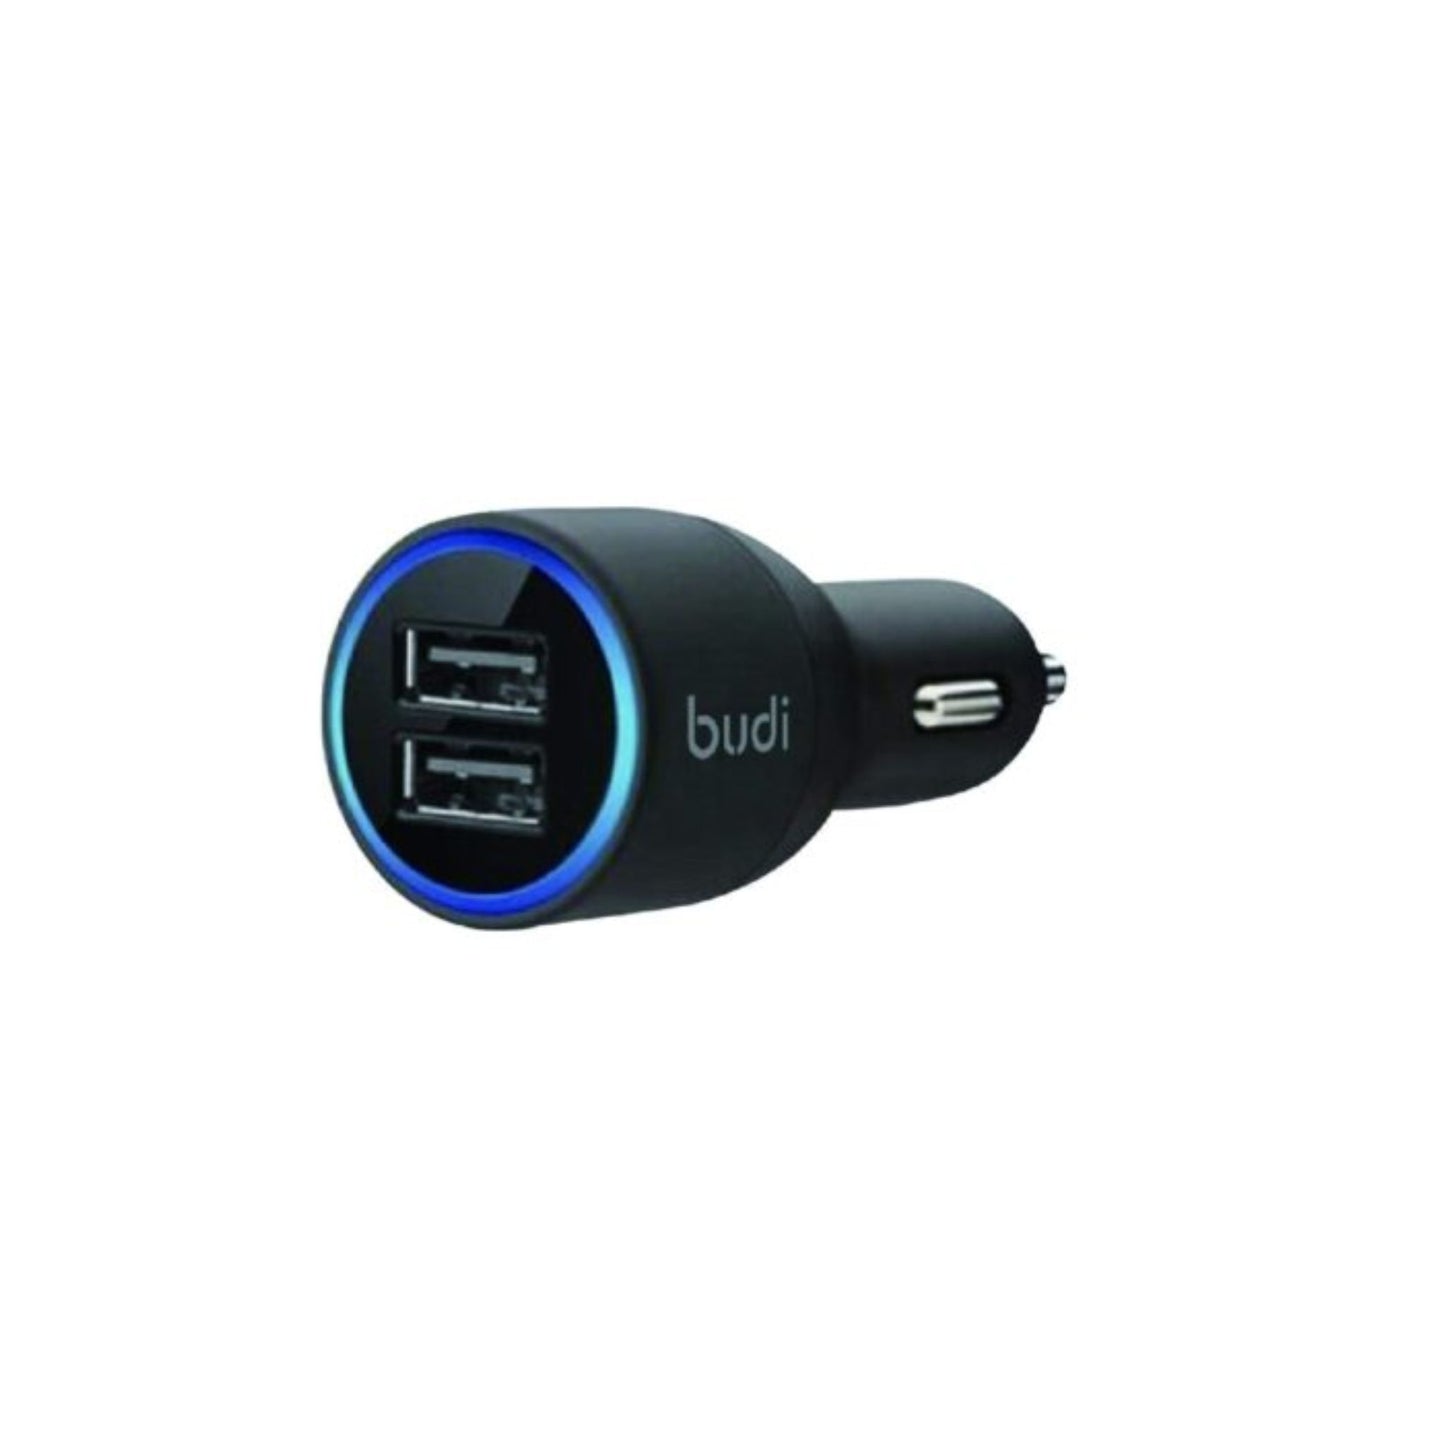 Budi Dual Usb Car Charger With Led Blue Indicator